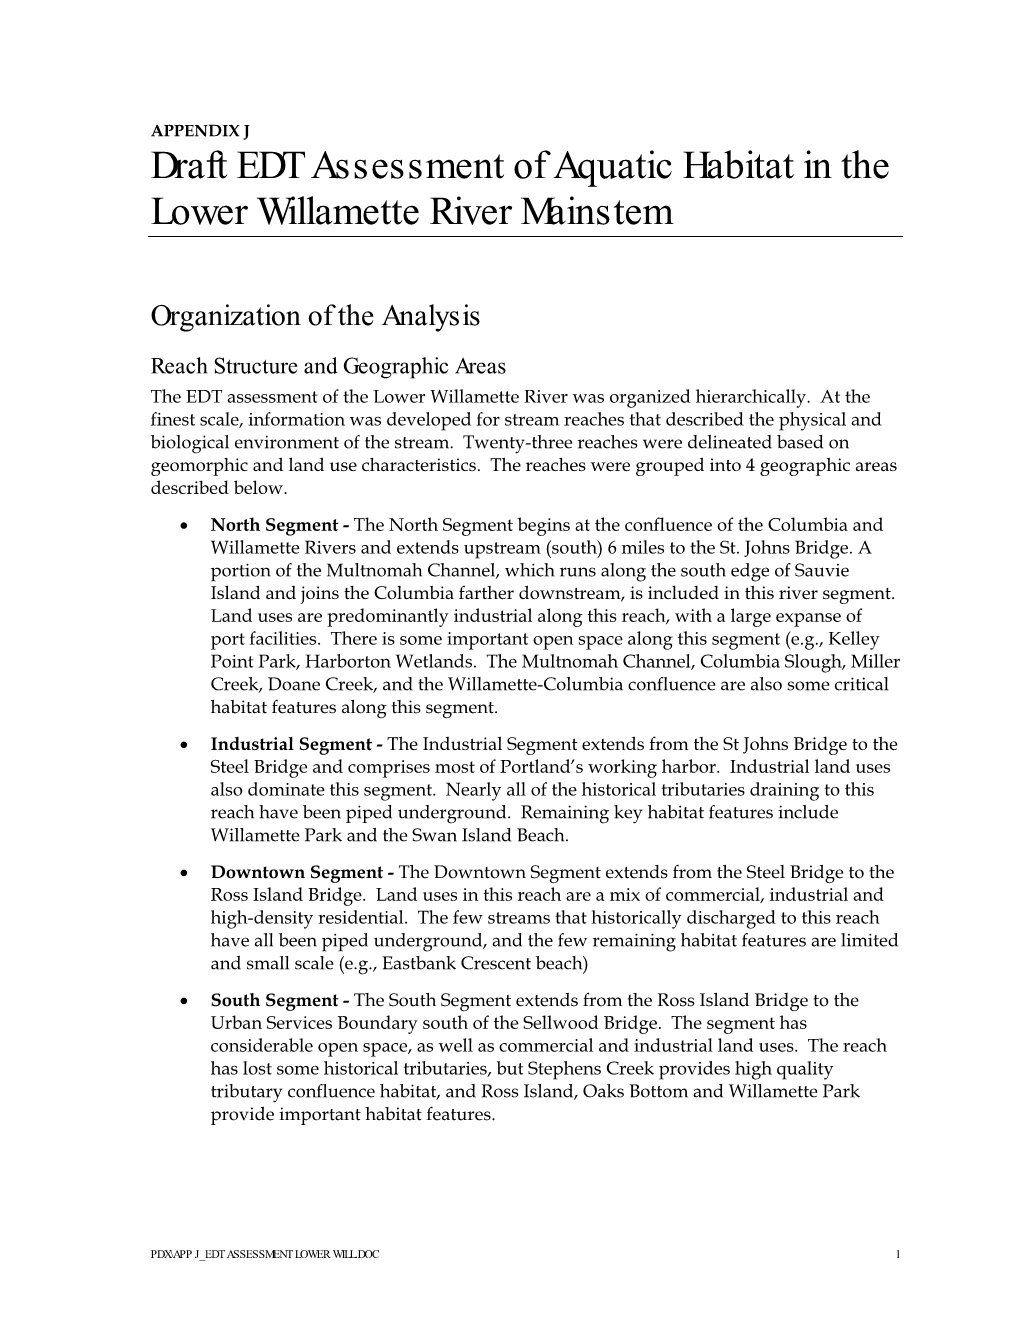 Draft EDT Assessment of Aquatic Habitat in the Lower Willamette River Mainstem